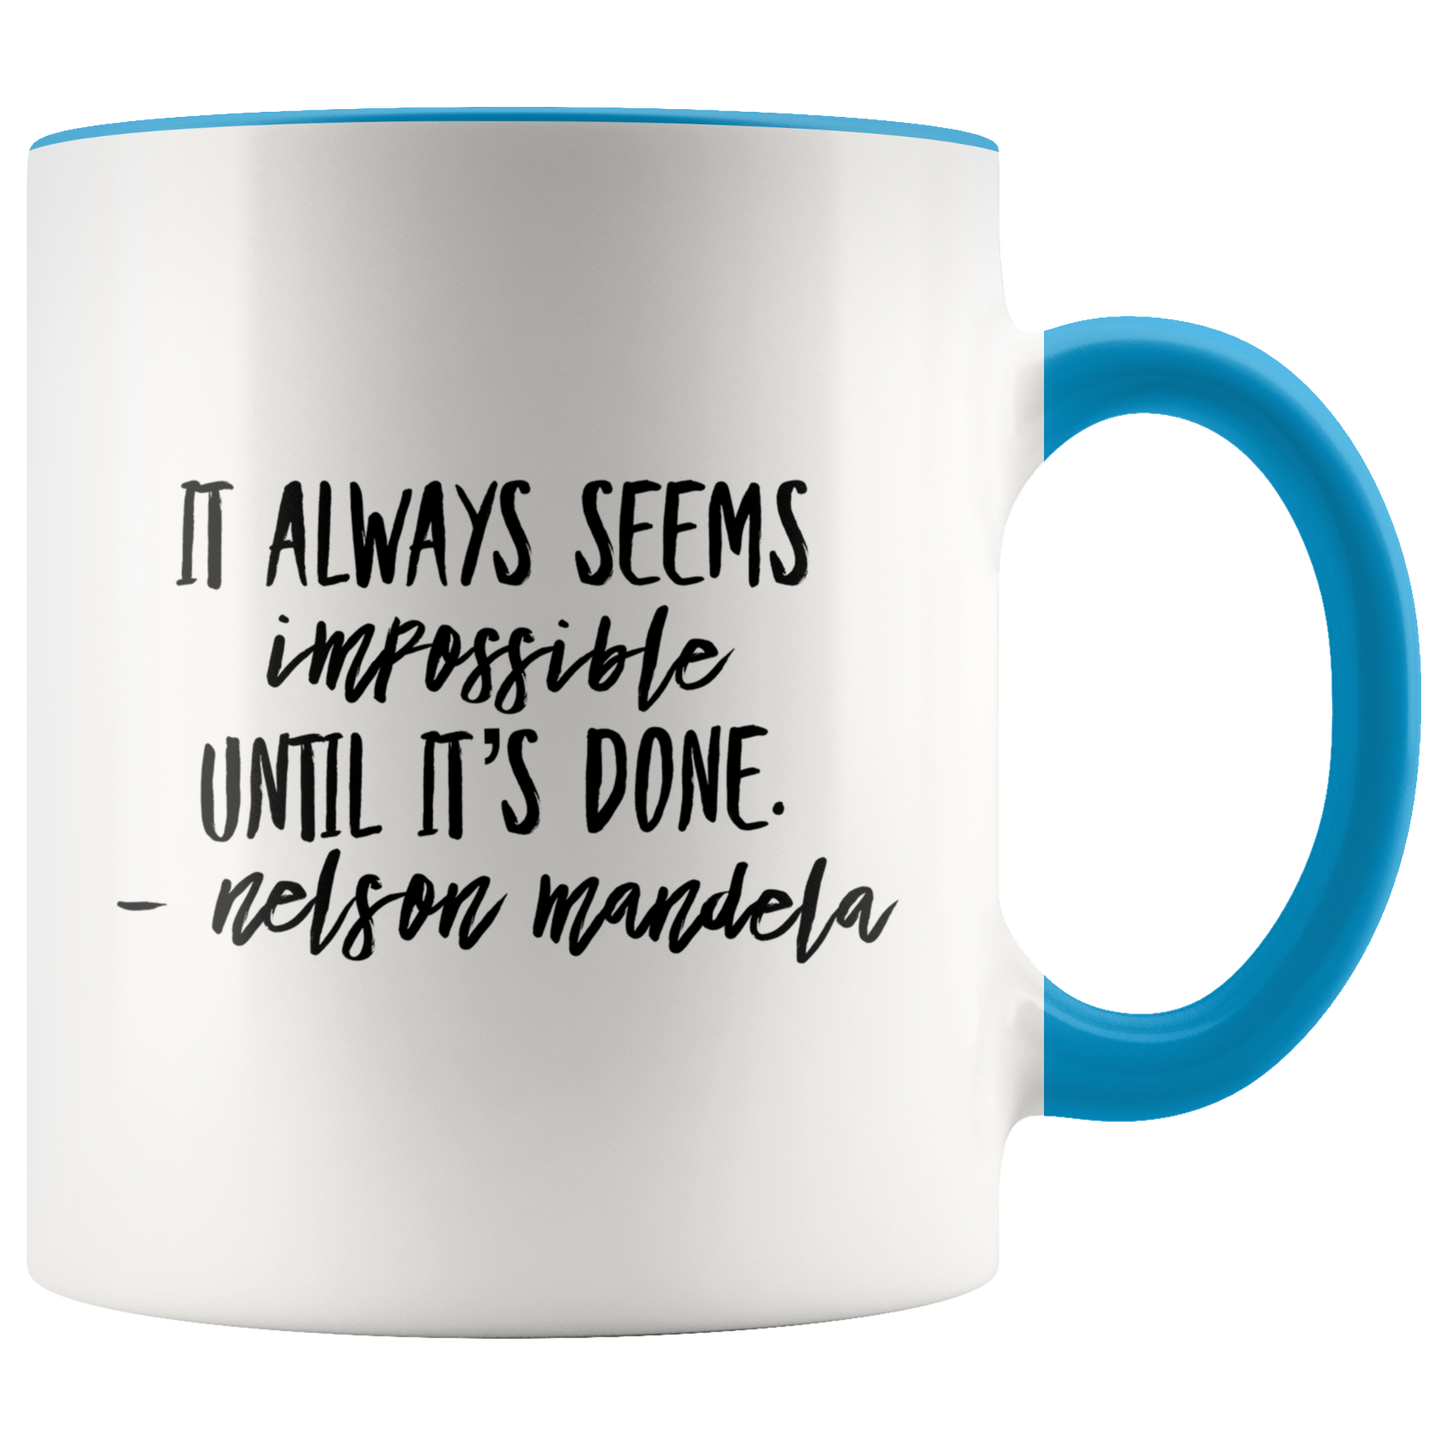 Mug with Saying | "It Always Seems Impossible Until It's Done" Mug | 11 oz. Ceramic Mug